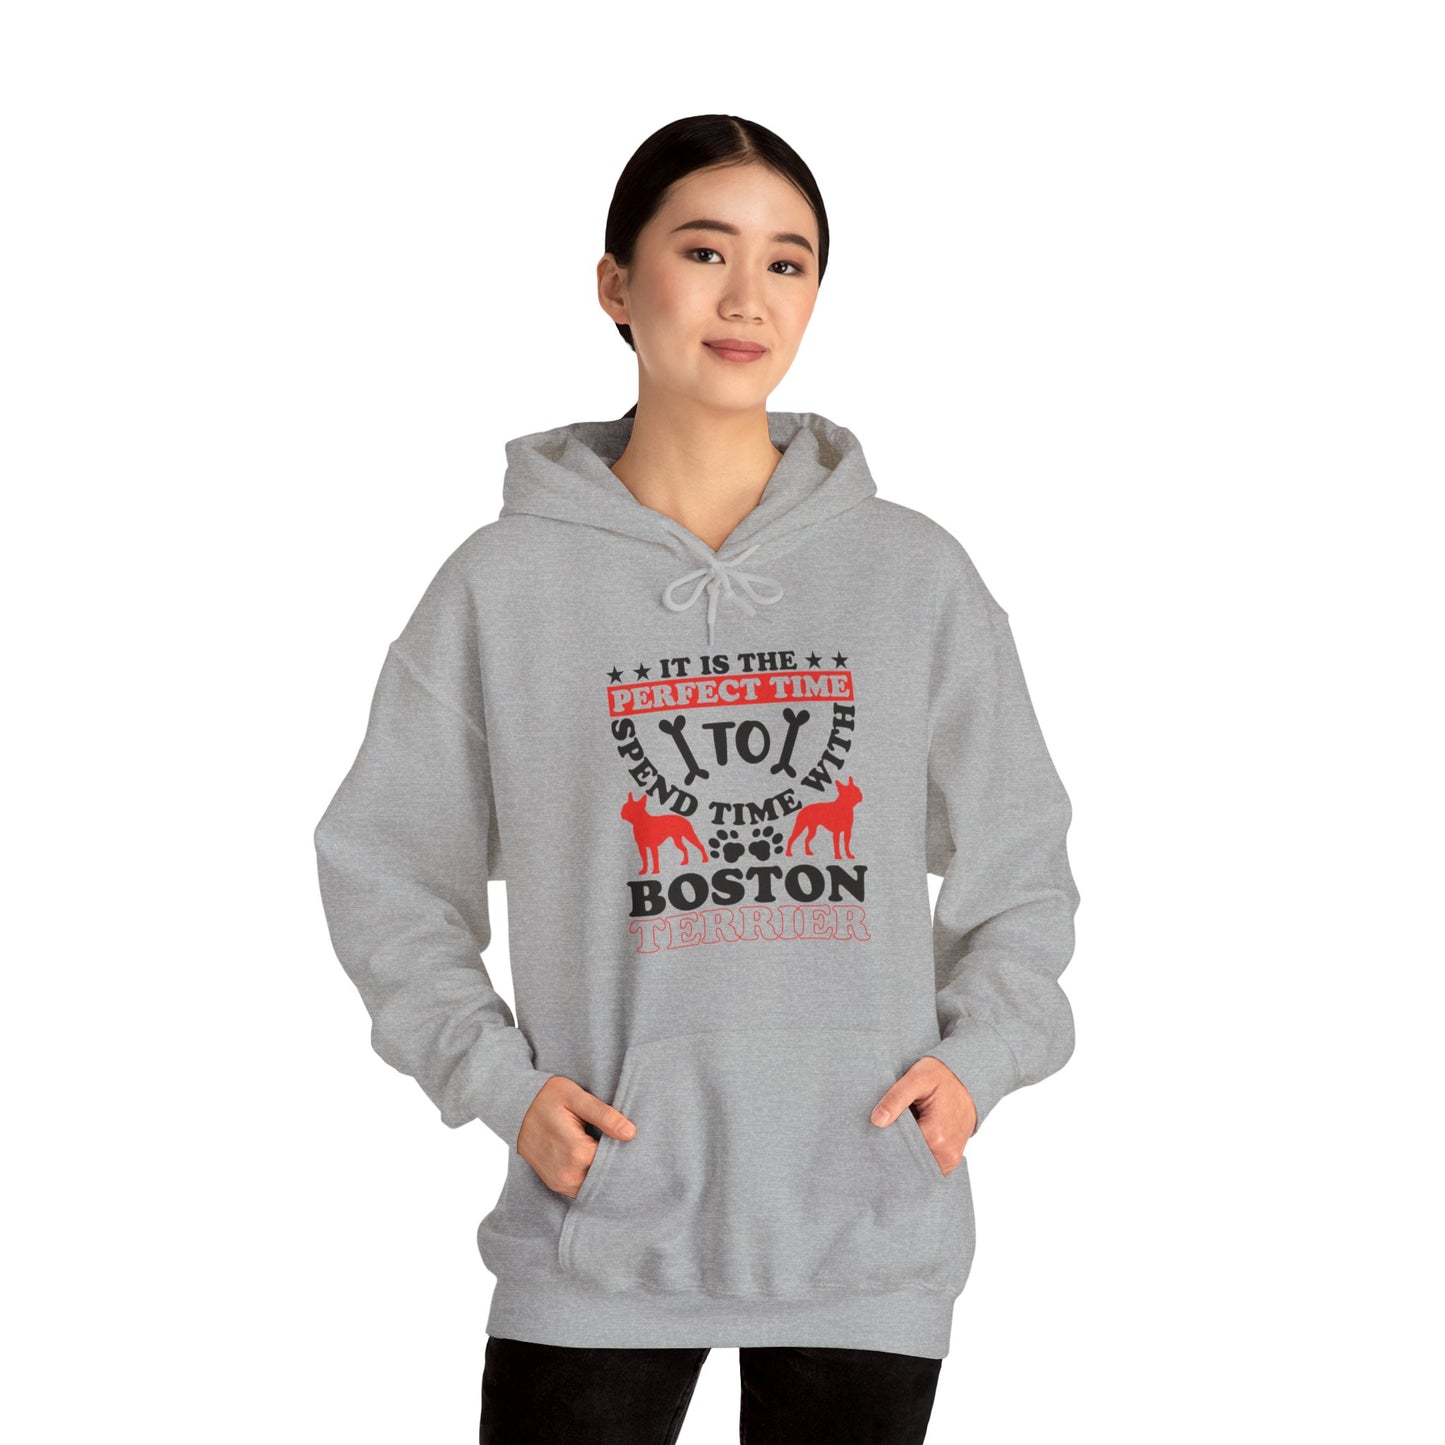 Lipton  - Unisex Hoodie for Boston Terrier lovers